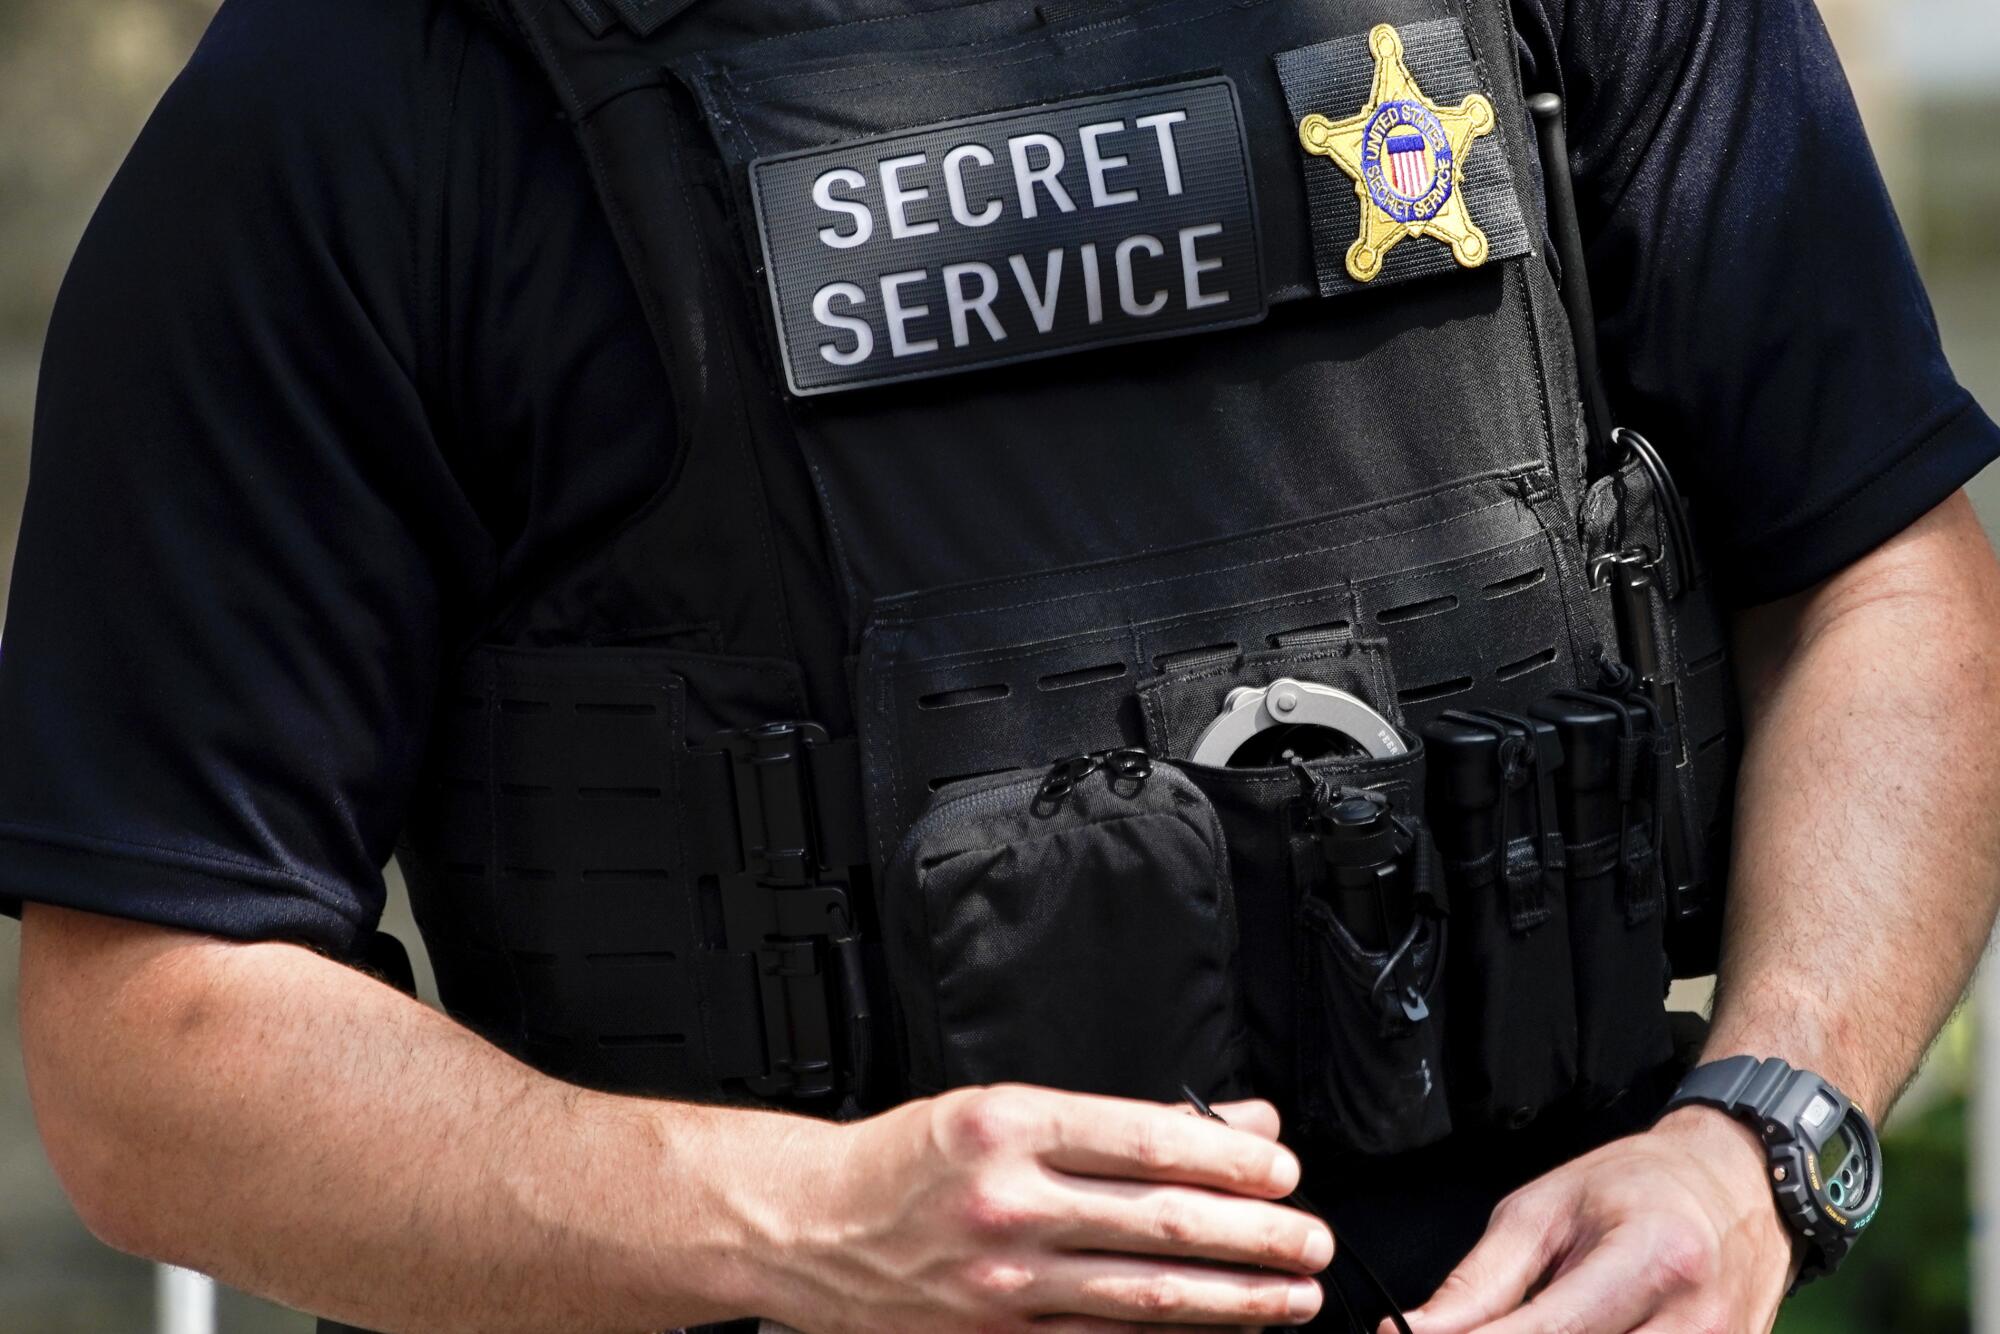 A close-up of a Secret Service agent wearing a black shirt and vest.